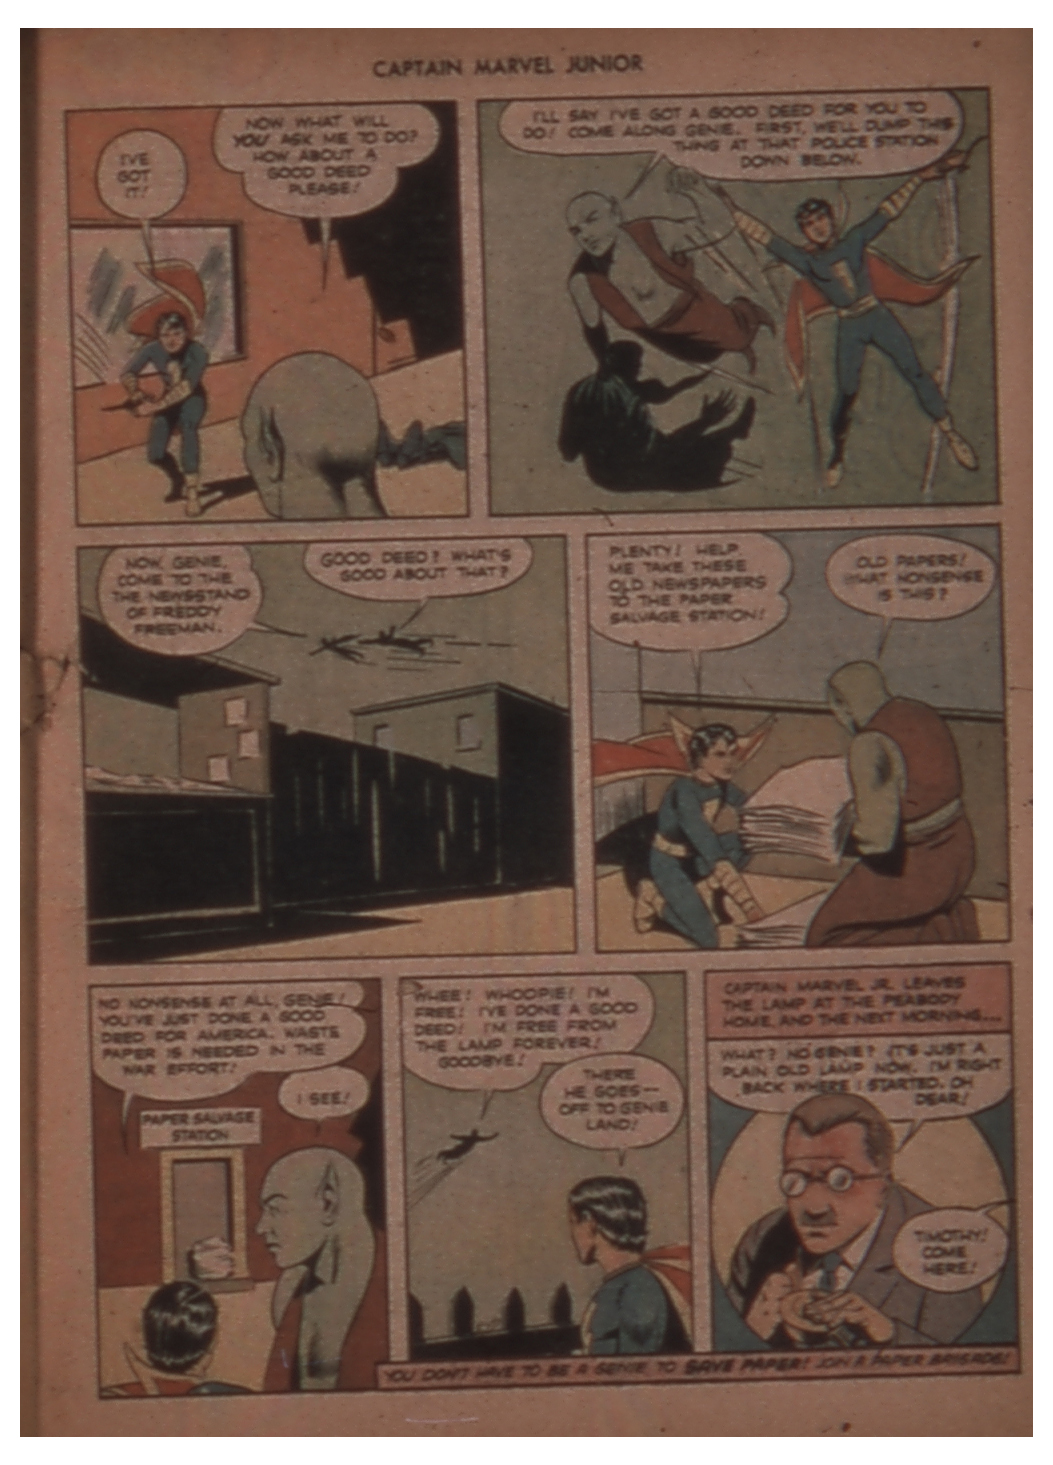 Read online Captain Marvel, Jr. comic -  Issue #18 - 27